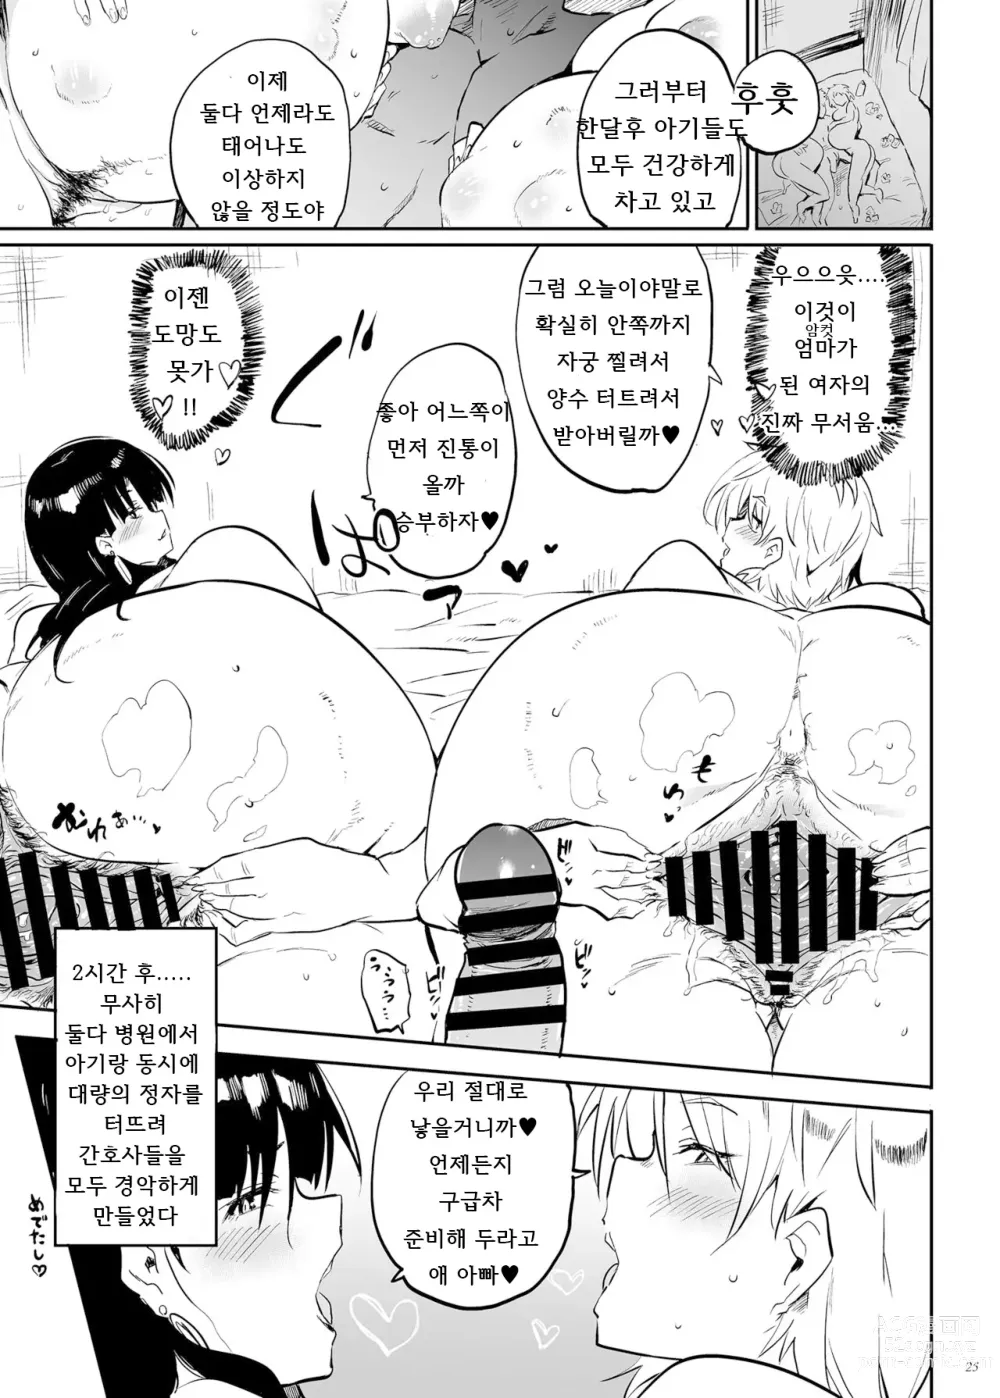 Page 25 of doujinshi 이거, 엄마입니다. 3